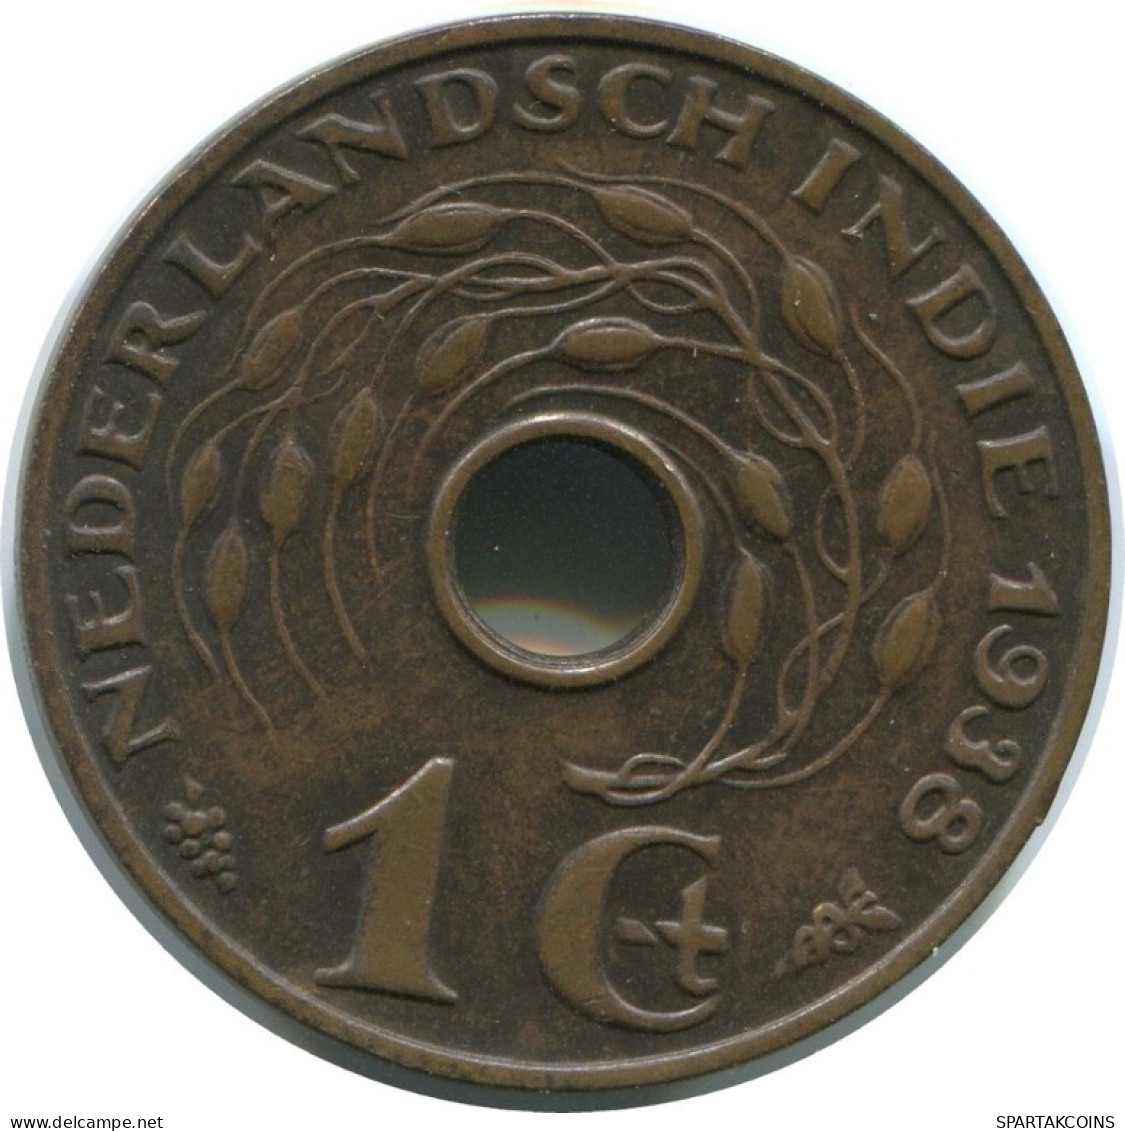 1938 1 CENT NIEDERLANDE OSTINDIEN #AE848.27.D.A - Dutch East Indies